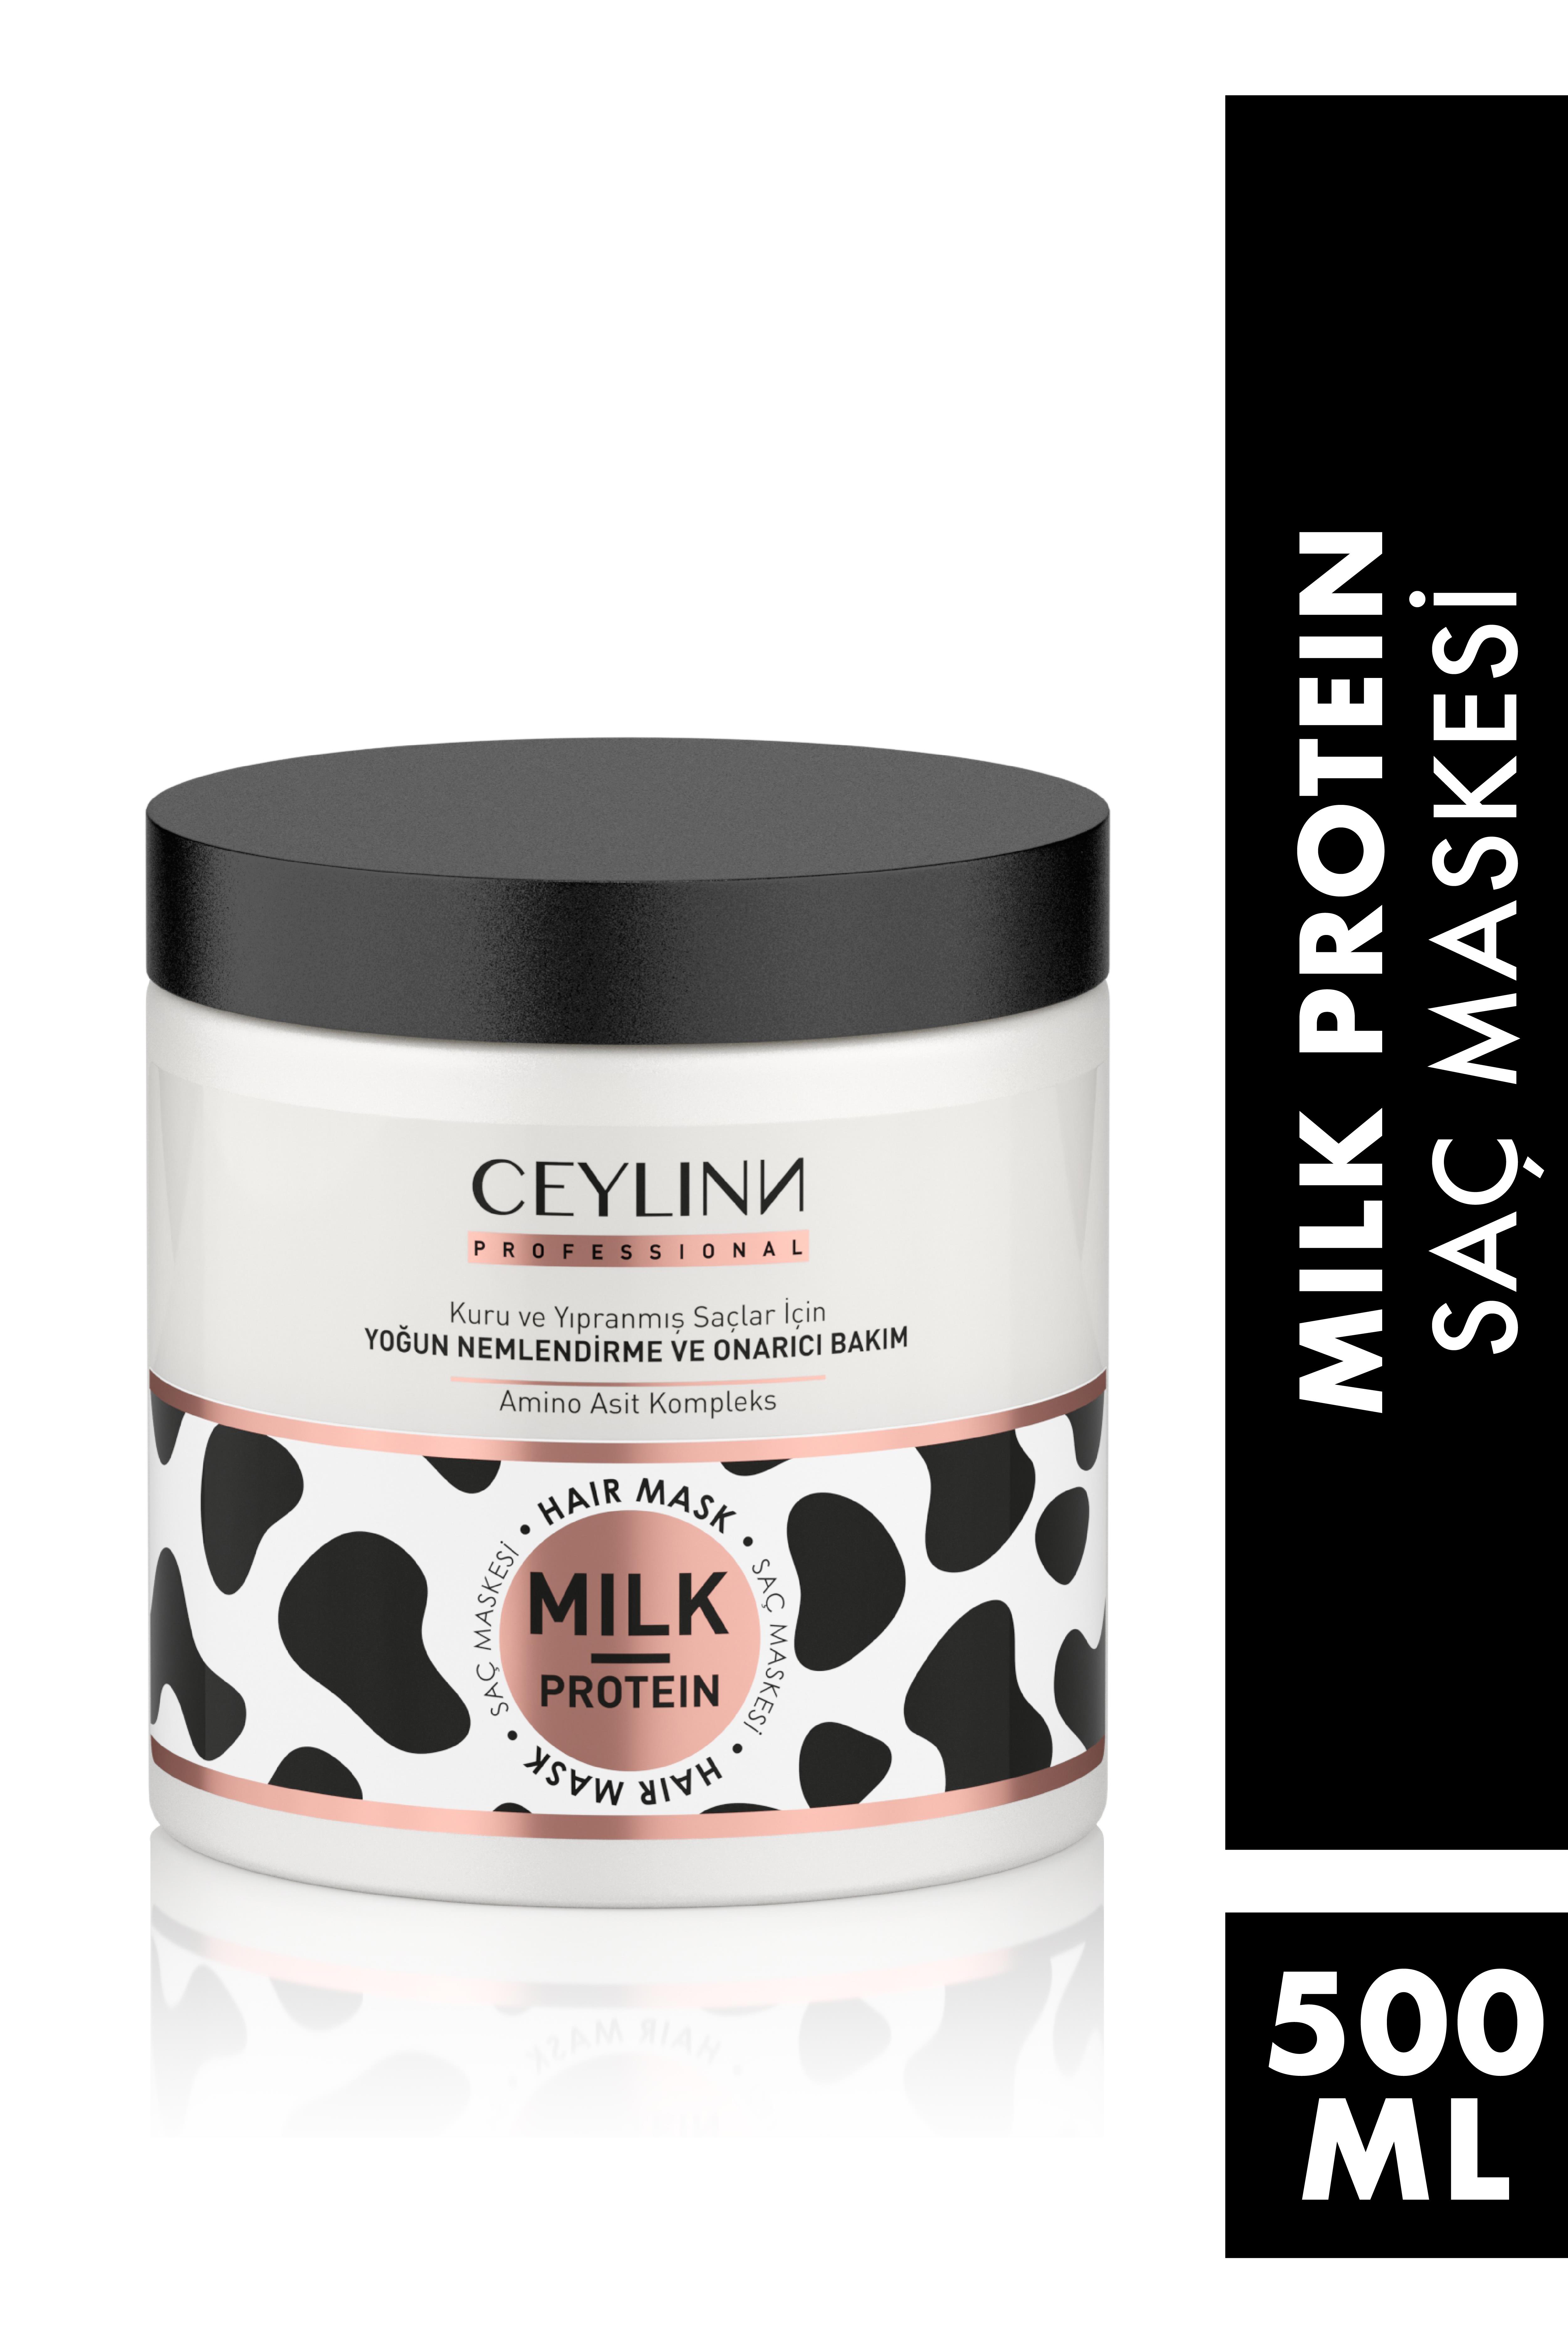 Ceylinn Milk Protein Saç Maskesi 500 ML